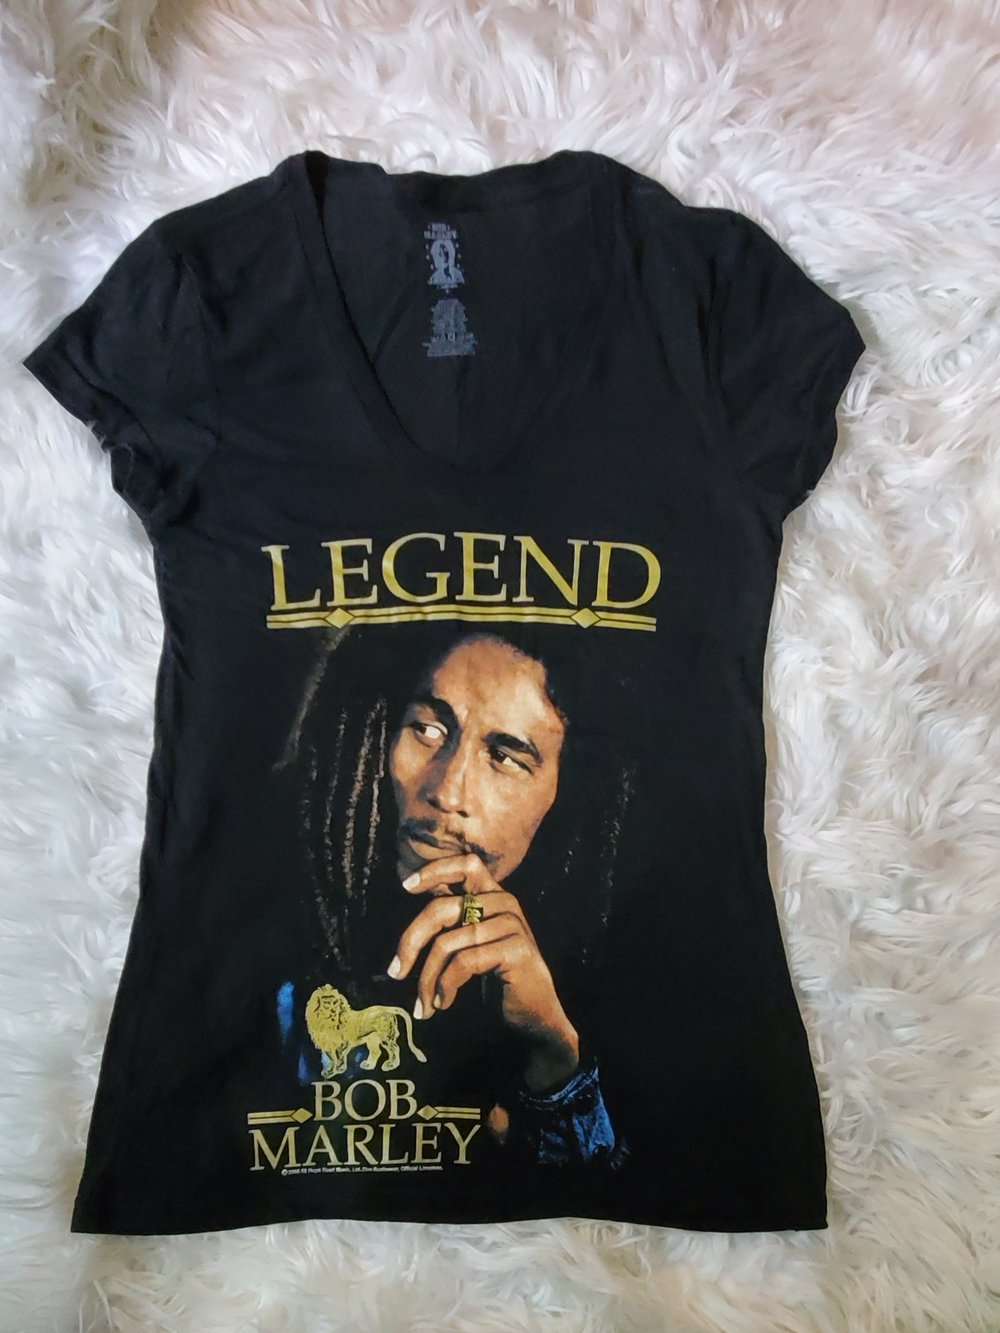 Bob Marley Legend ladies tee